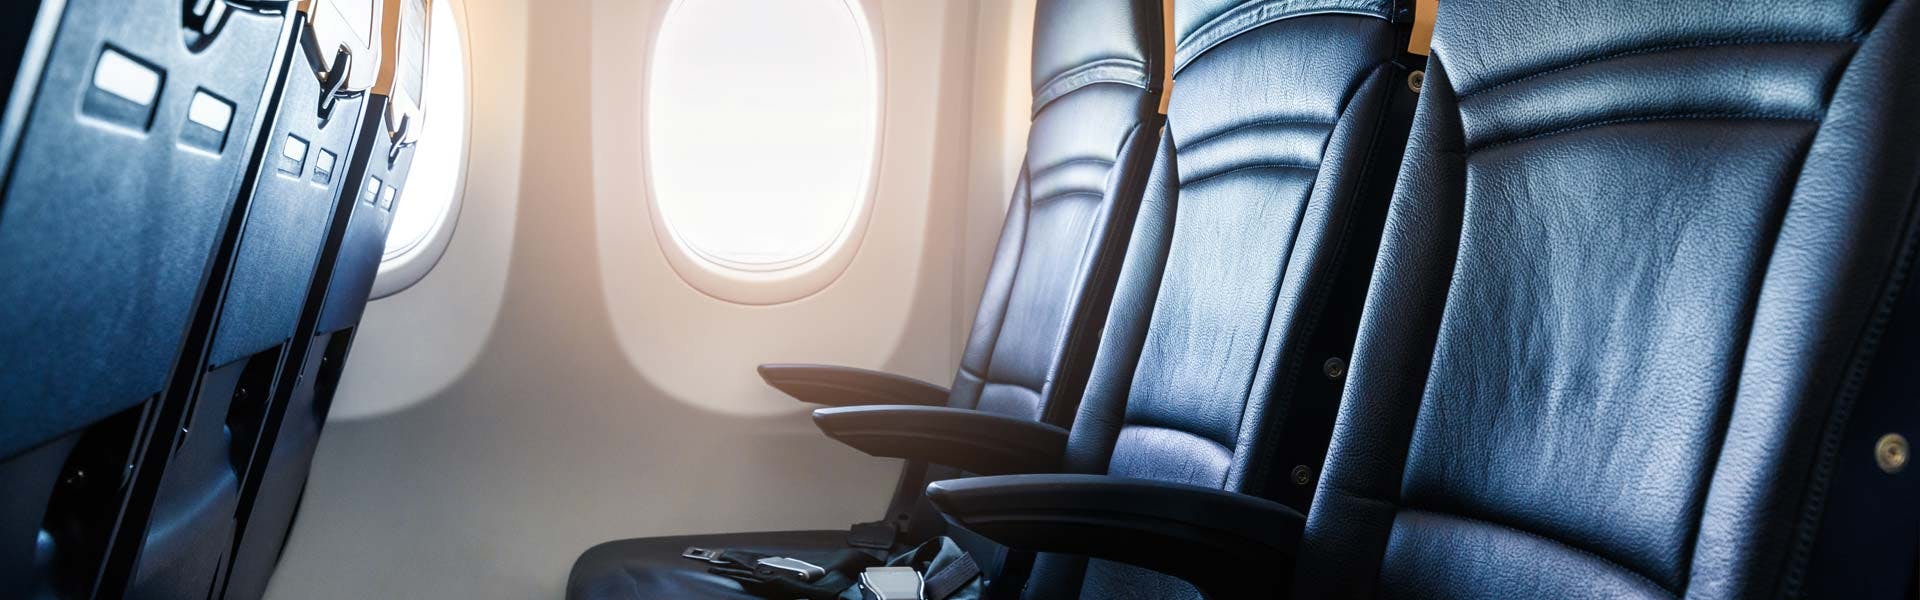 Find true comfort on a charter flight.